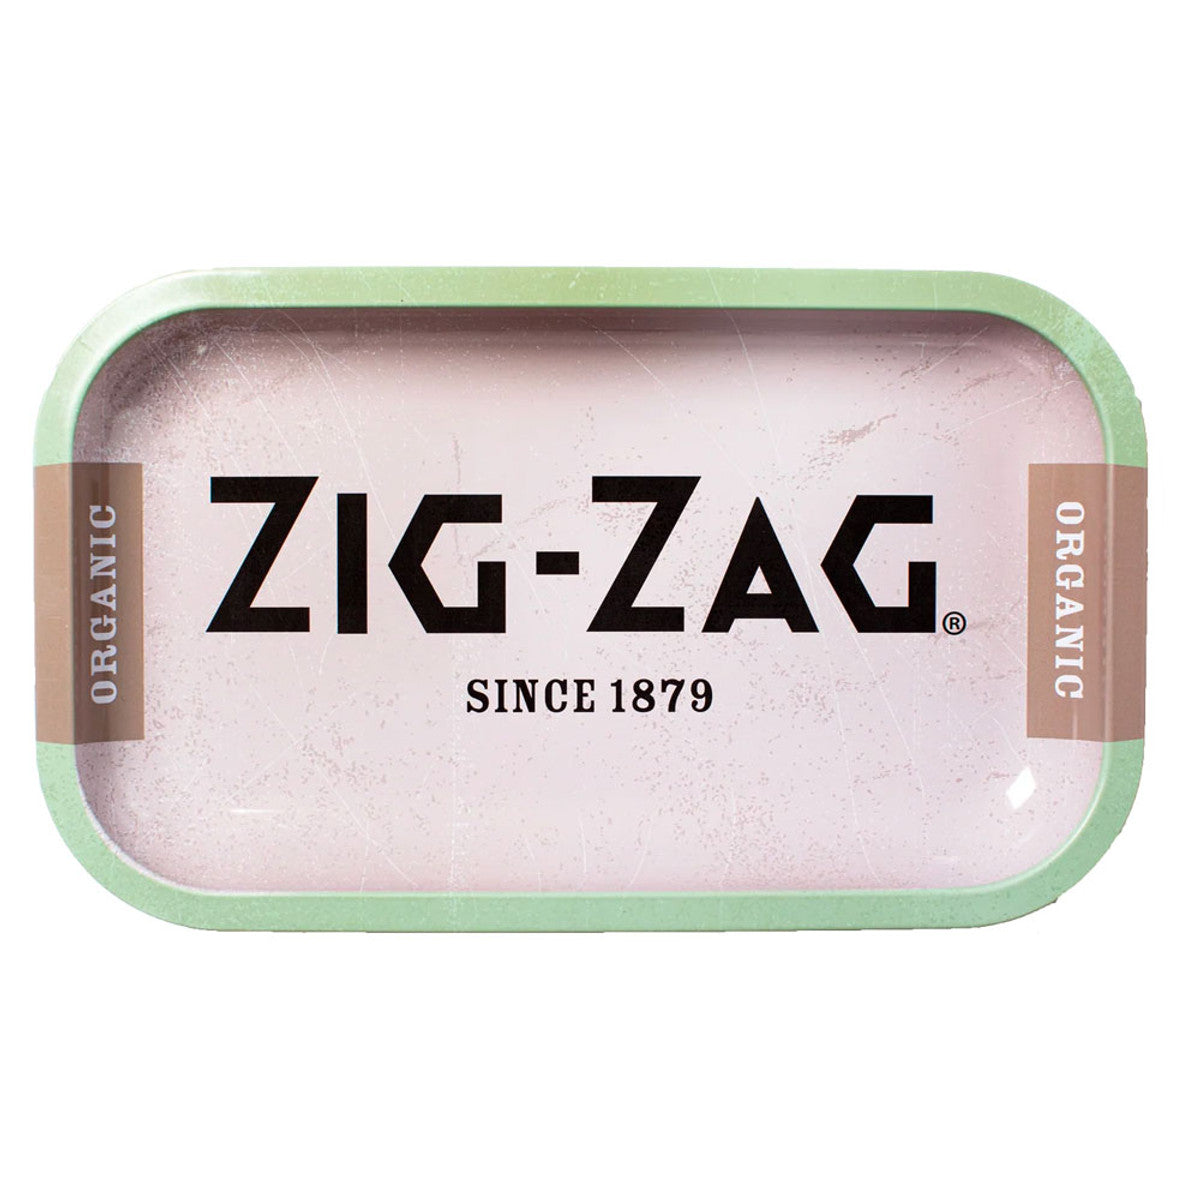 ZIG-ZAG METAL ROLLING TRAY - SINCE 1879 (ORGANIC)